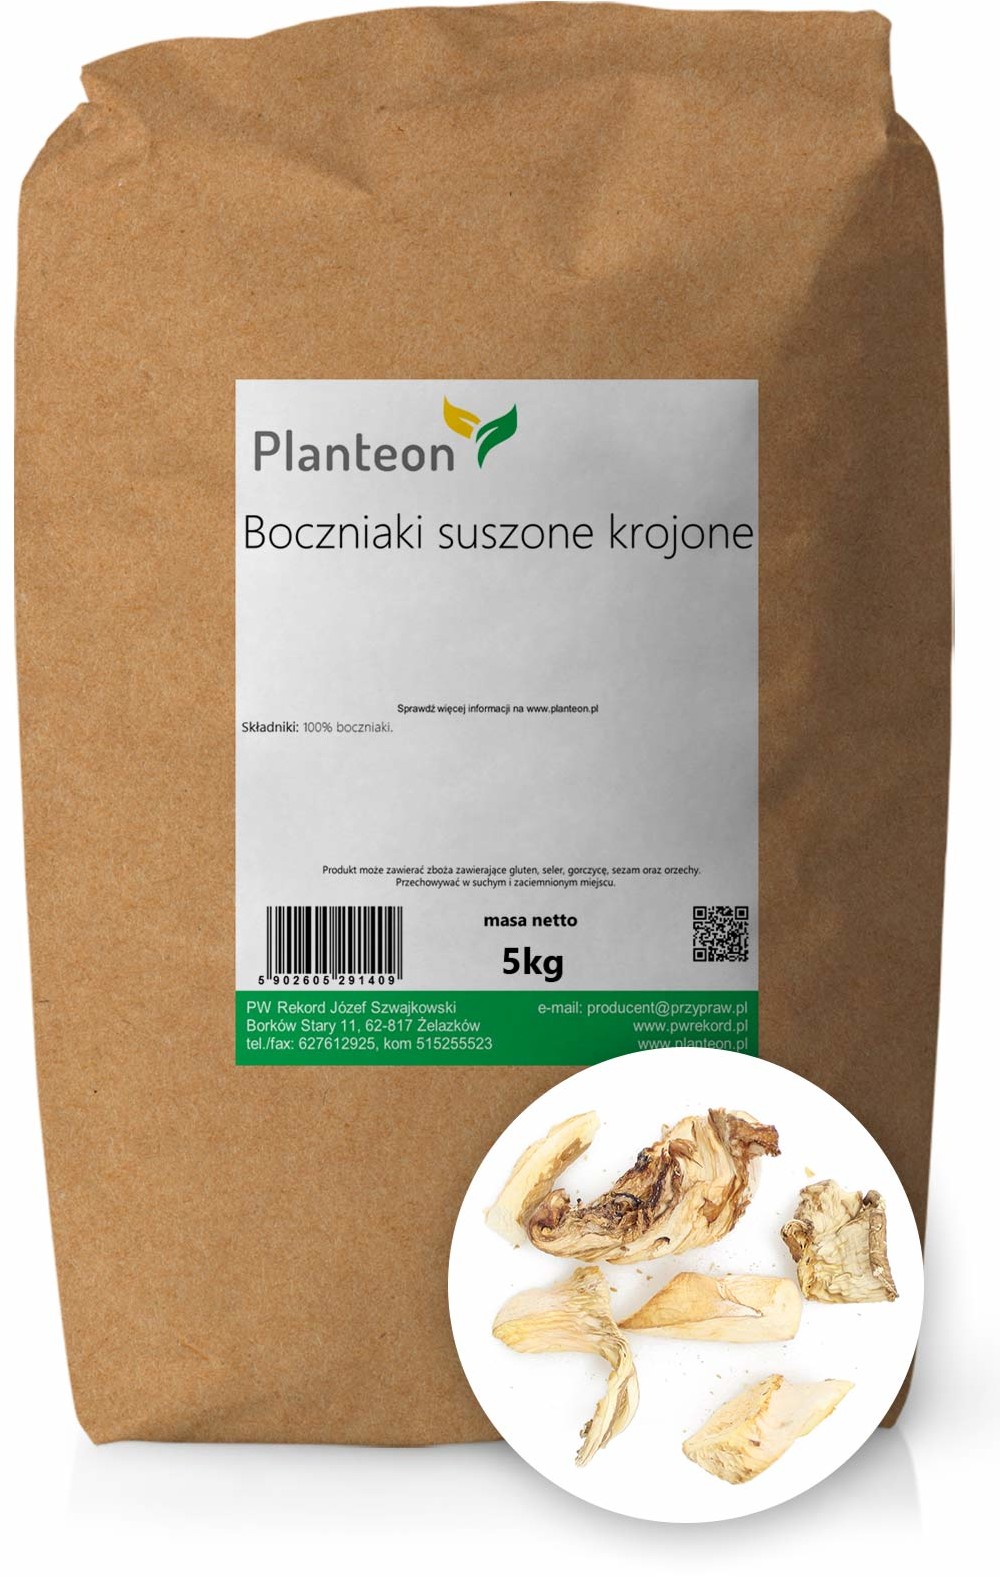 Planteon Boczniaki suszone krojone 5kg 2-0701-01-6